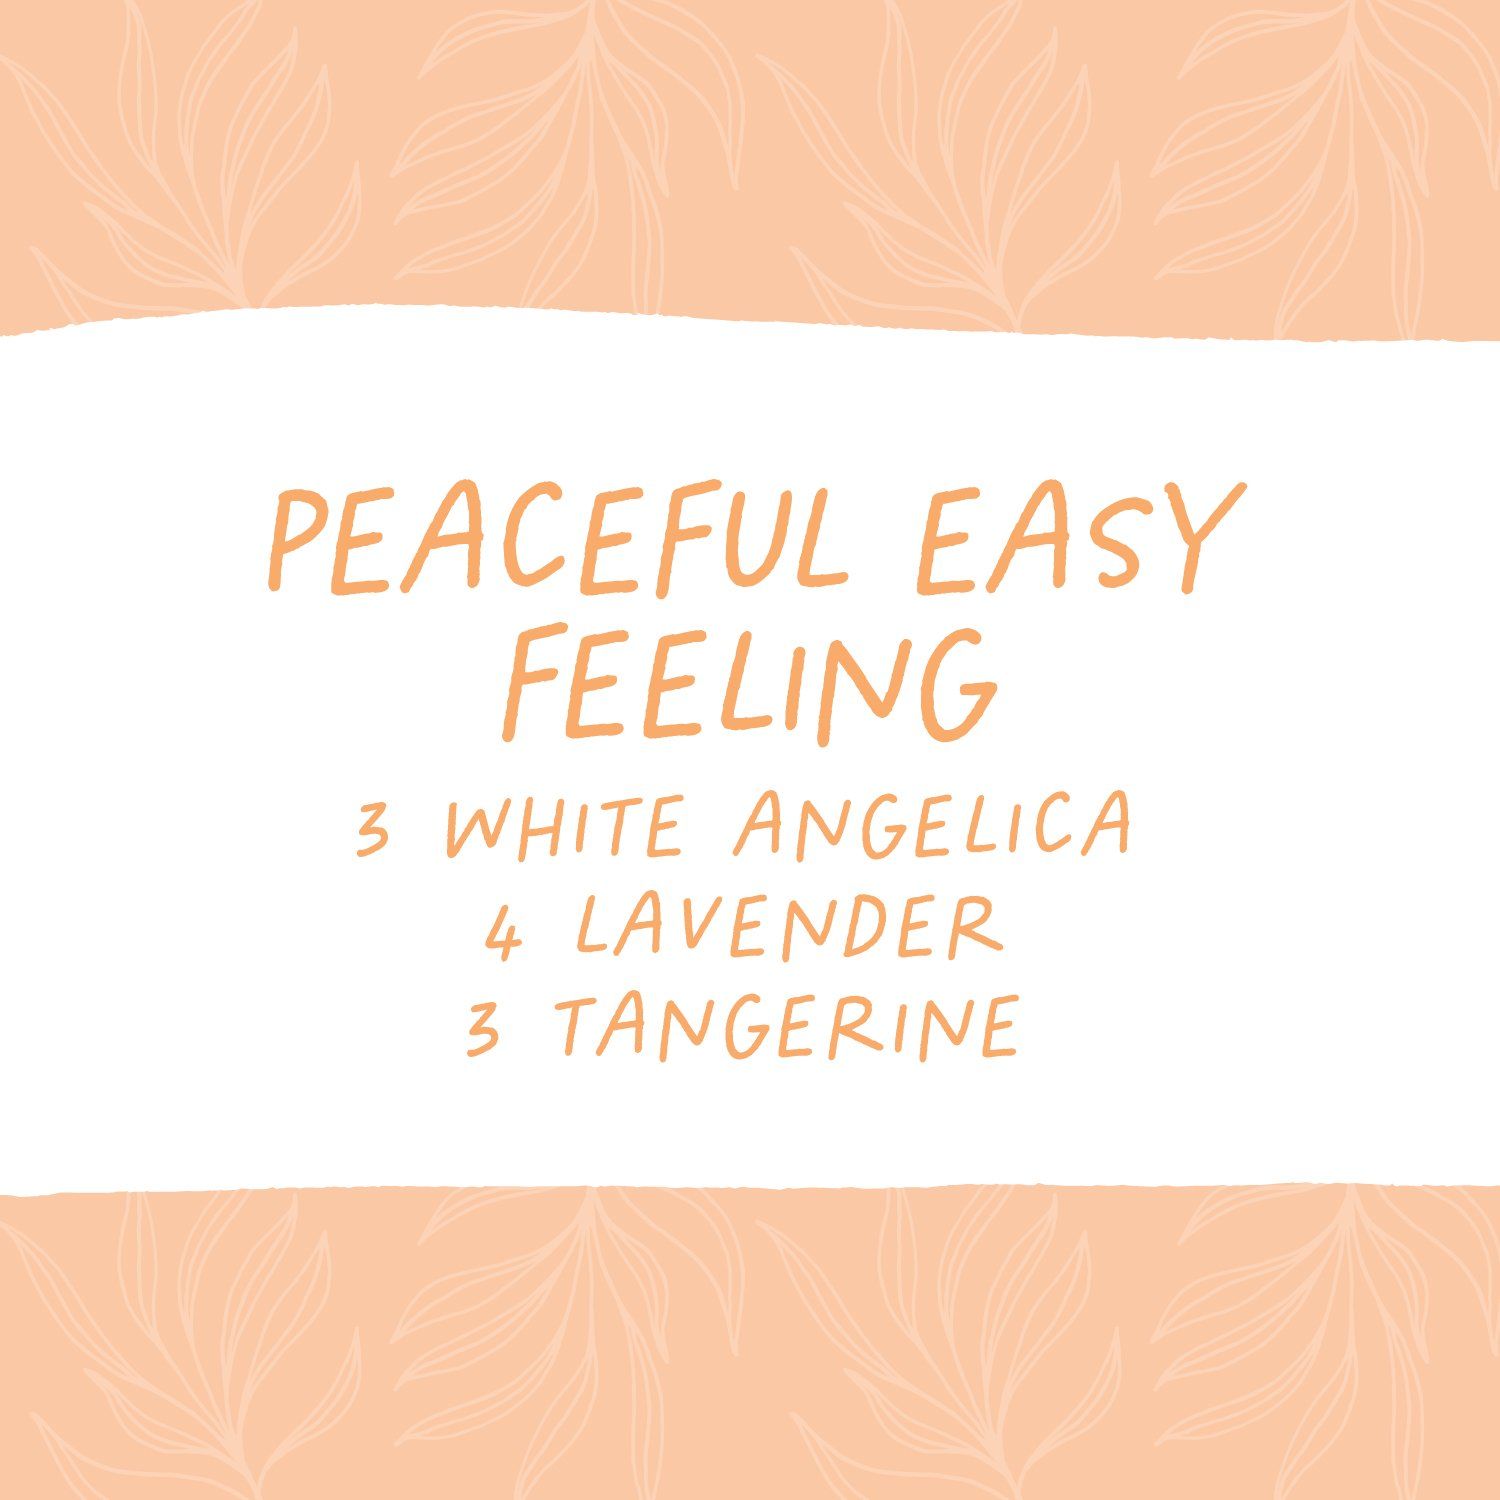 Peaceful Easy feeling